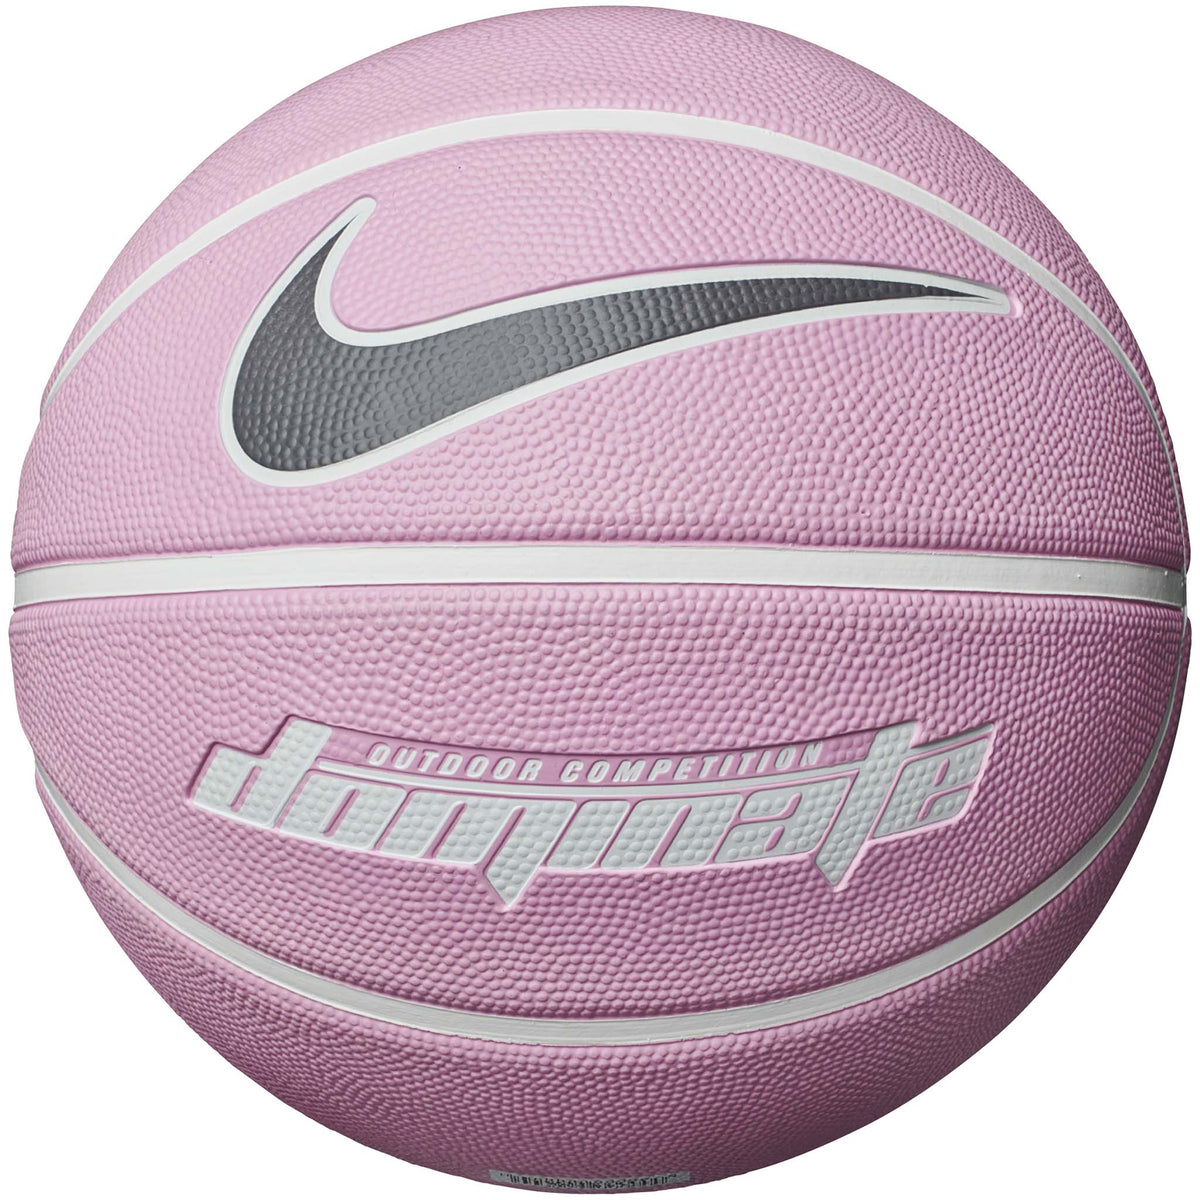 Nike Dominate 8P ballon de basketball rose blanc gunsmoke